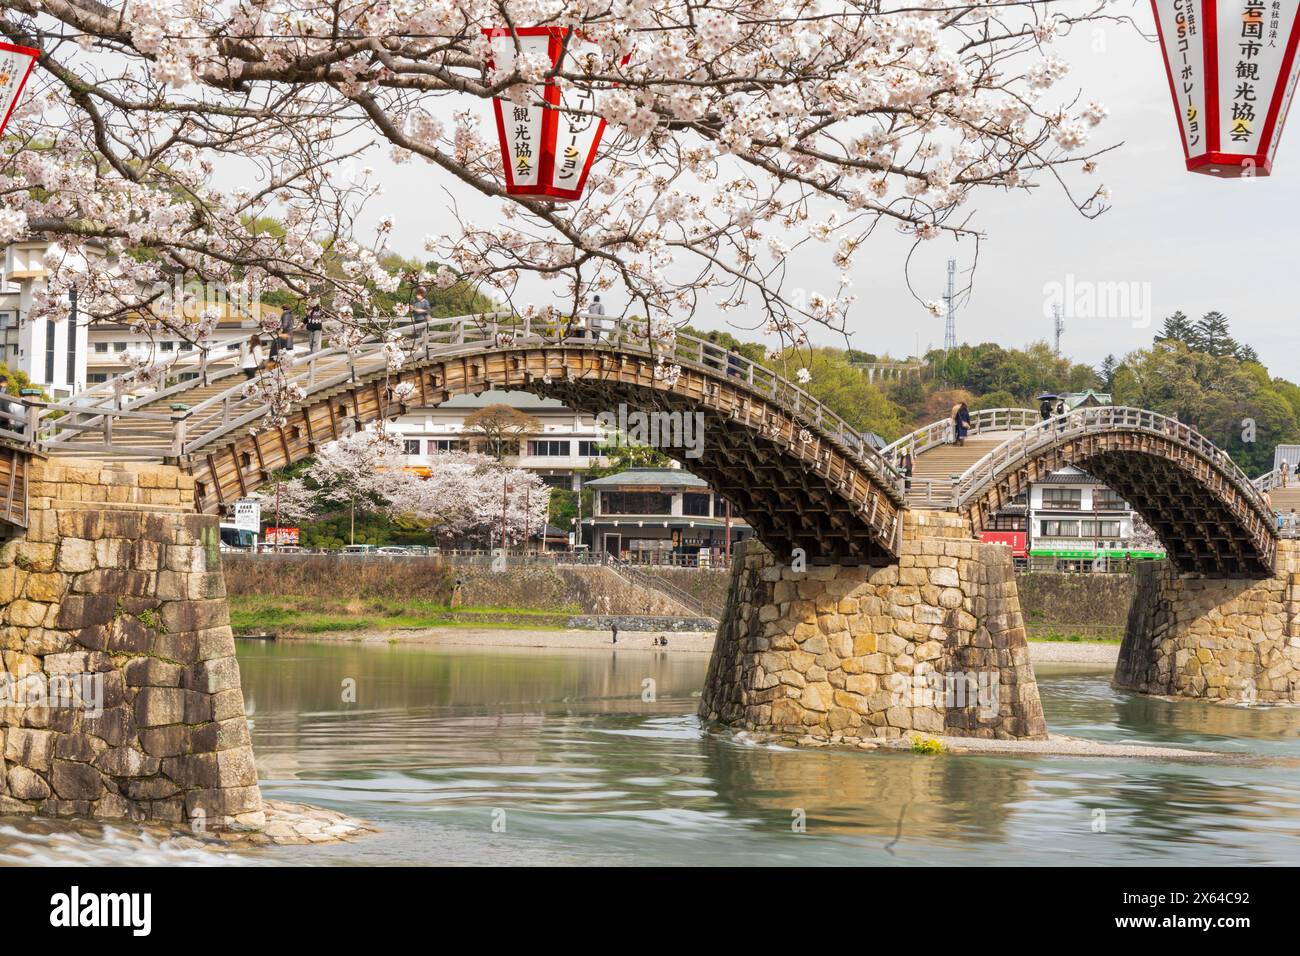 Kintai Brücke Sakura Festival. Kirschblüten am Ufer des Nishiki Flusses. Iwakuni, Präfektur Yamaguchi, Japan. Stockfoto